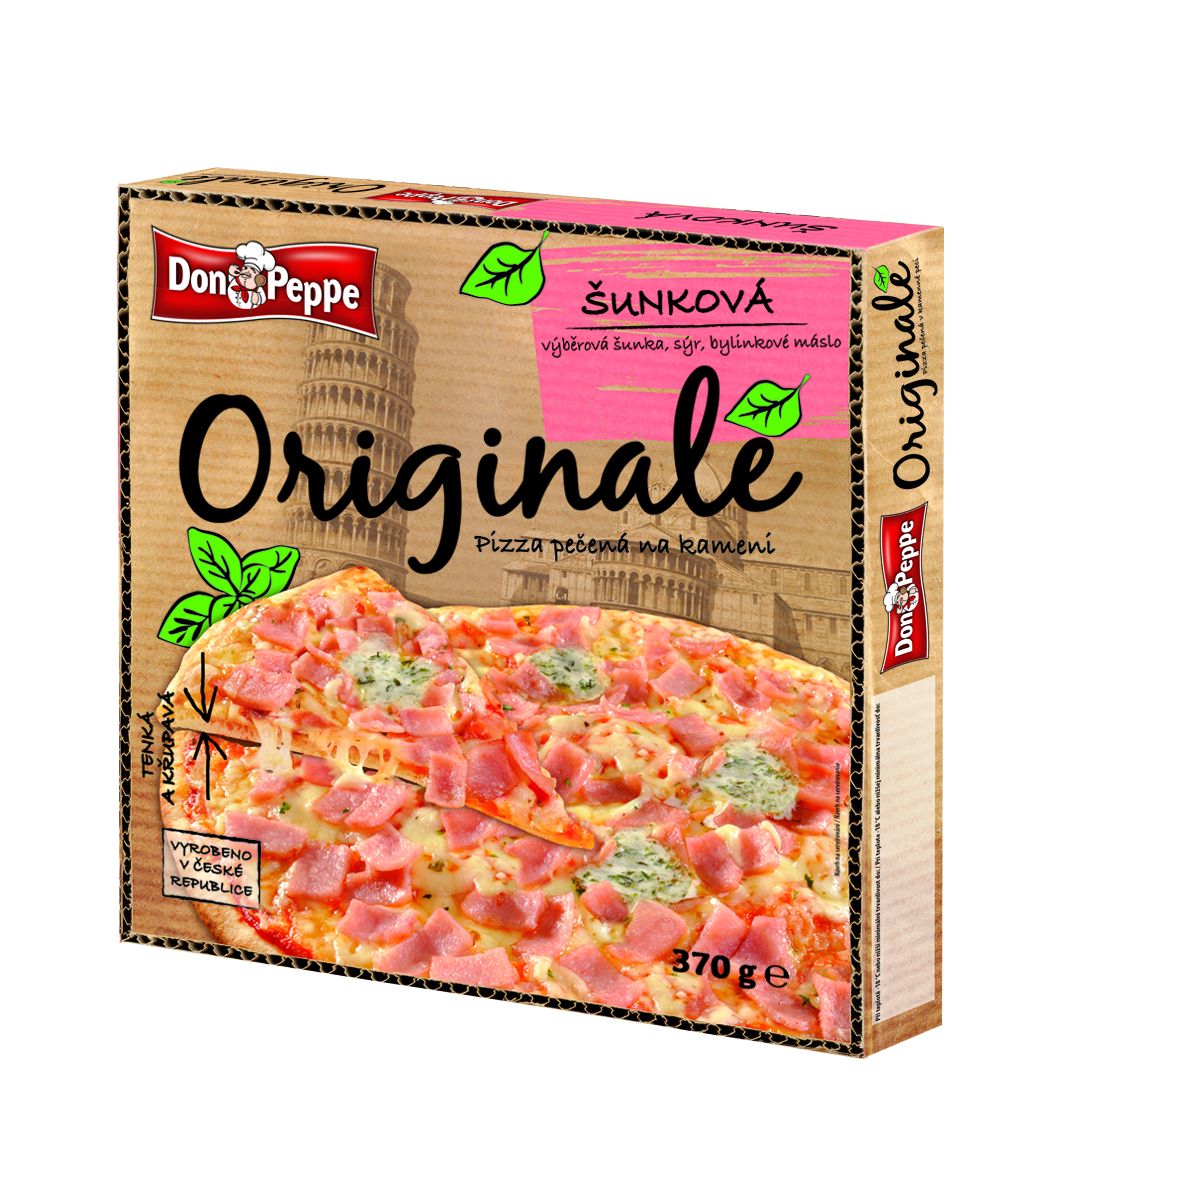 Don Peppe Originale pizza Šunková 370 g